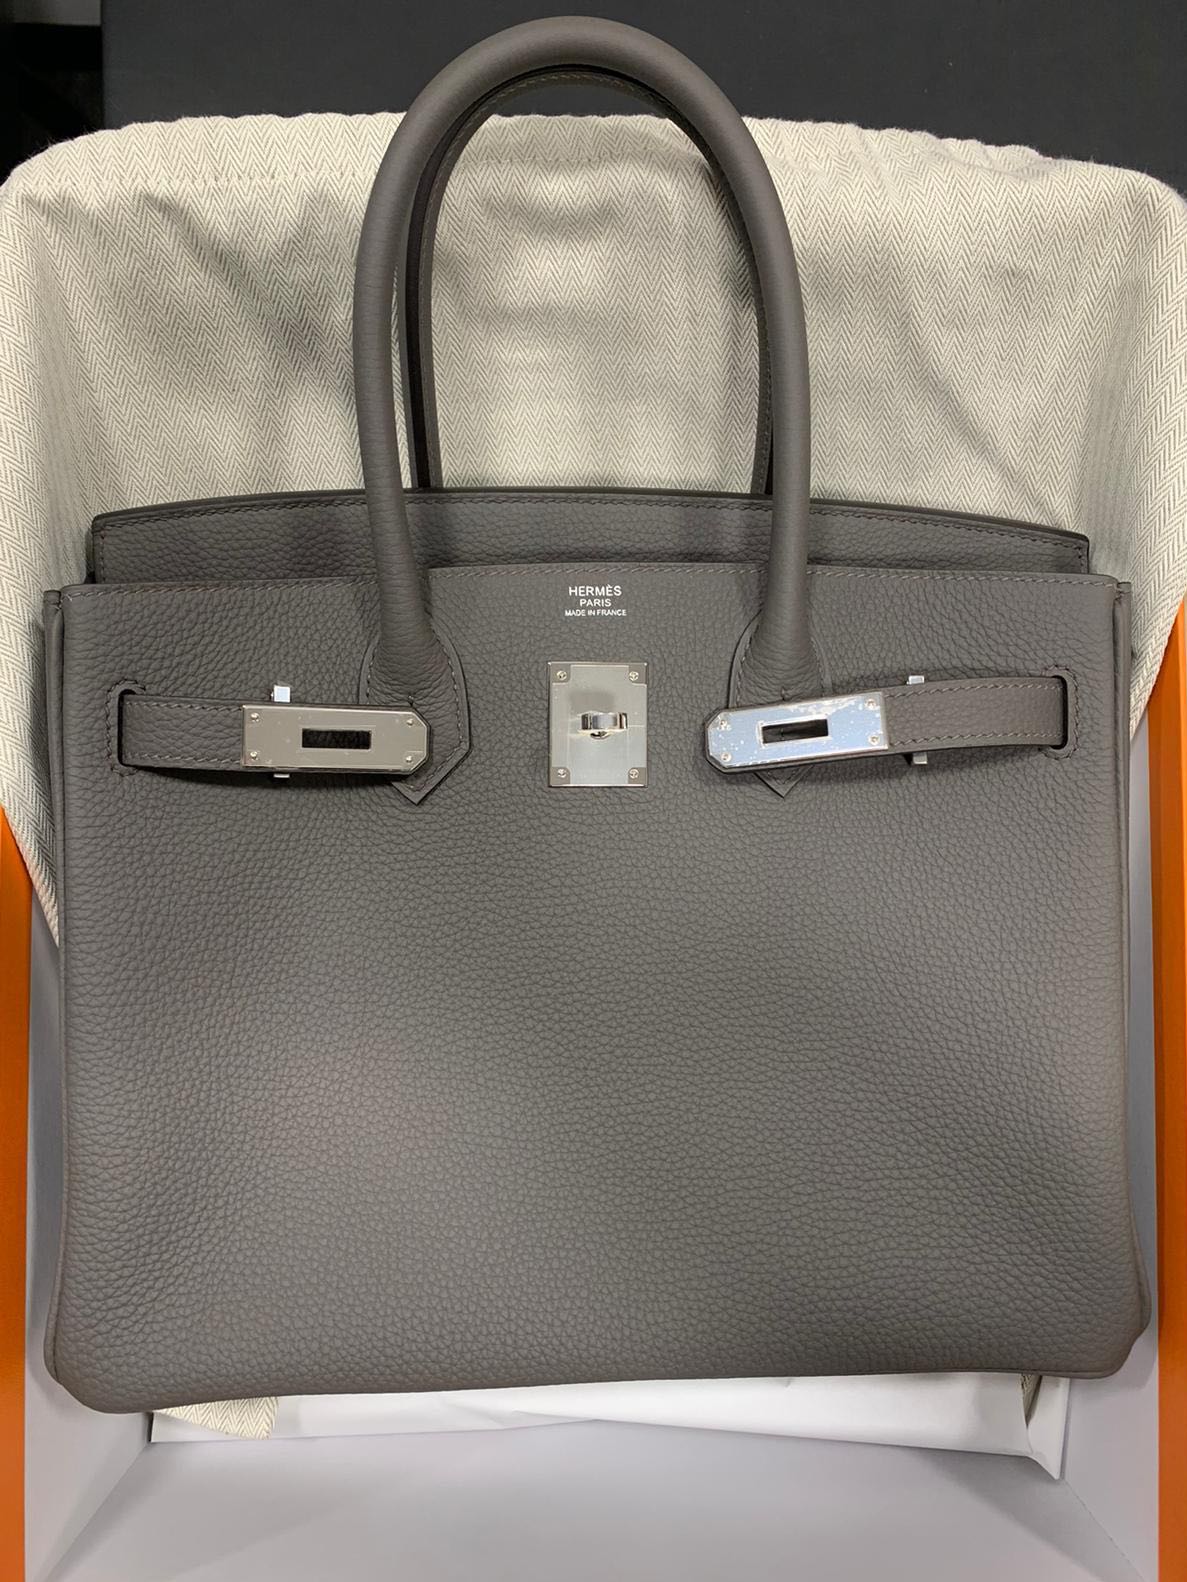 Hermes Birkin 30 Gris Etain in PHW, Luxury, Bags & Wallets on